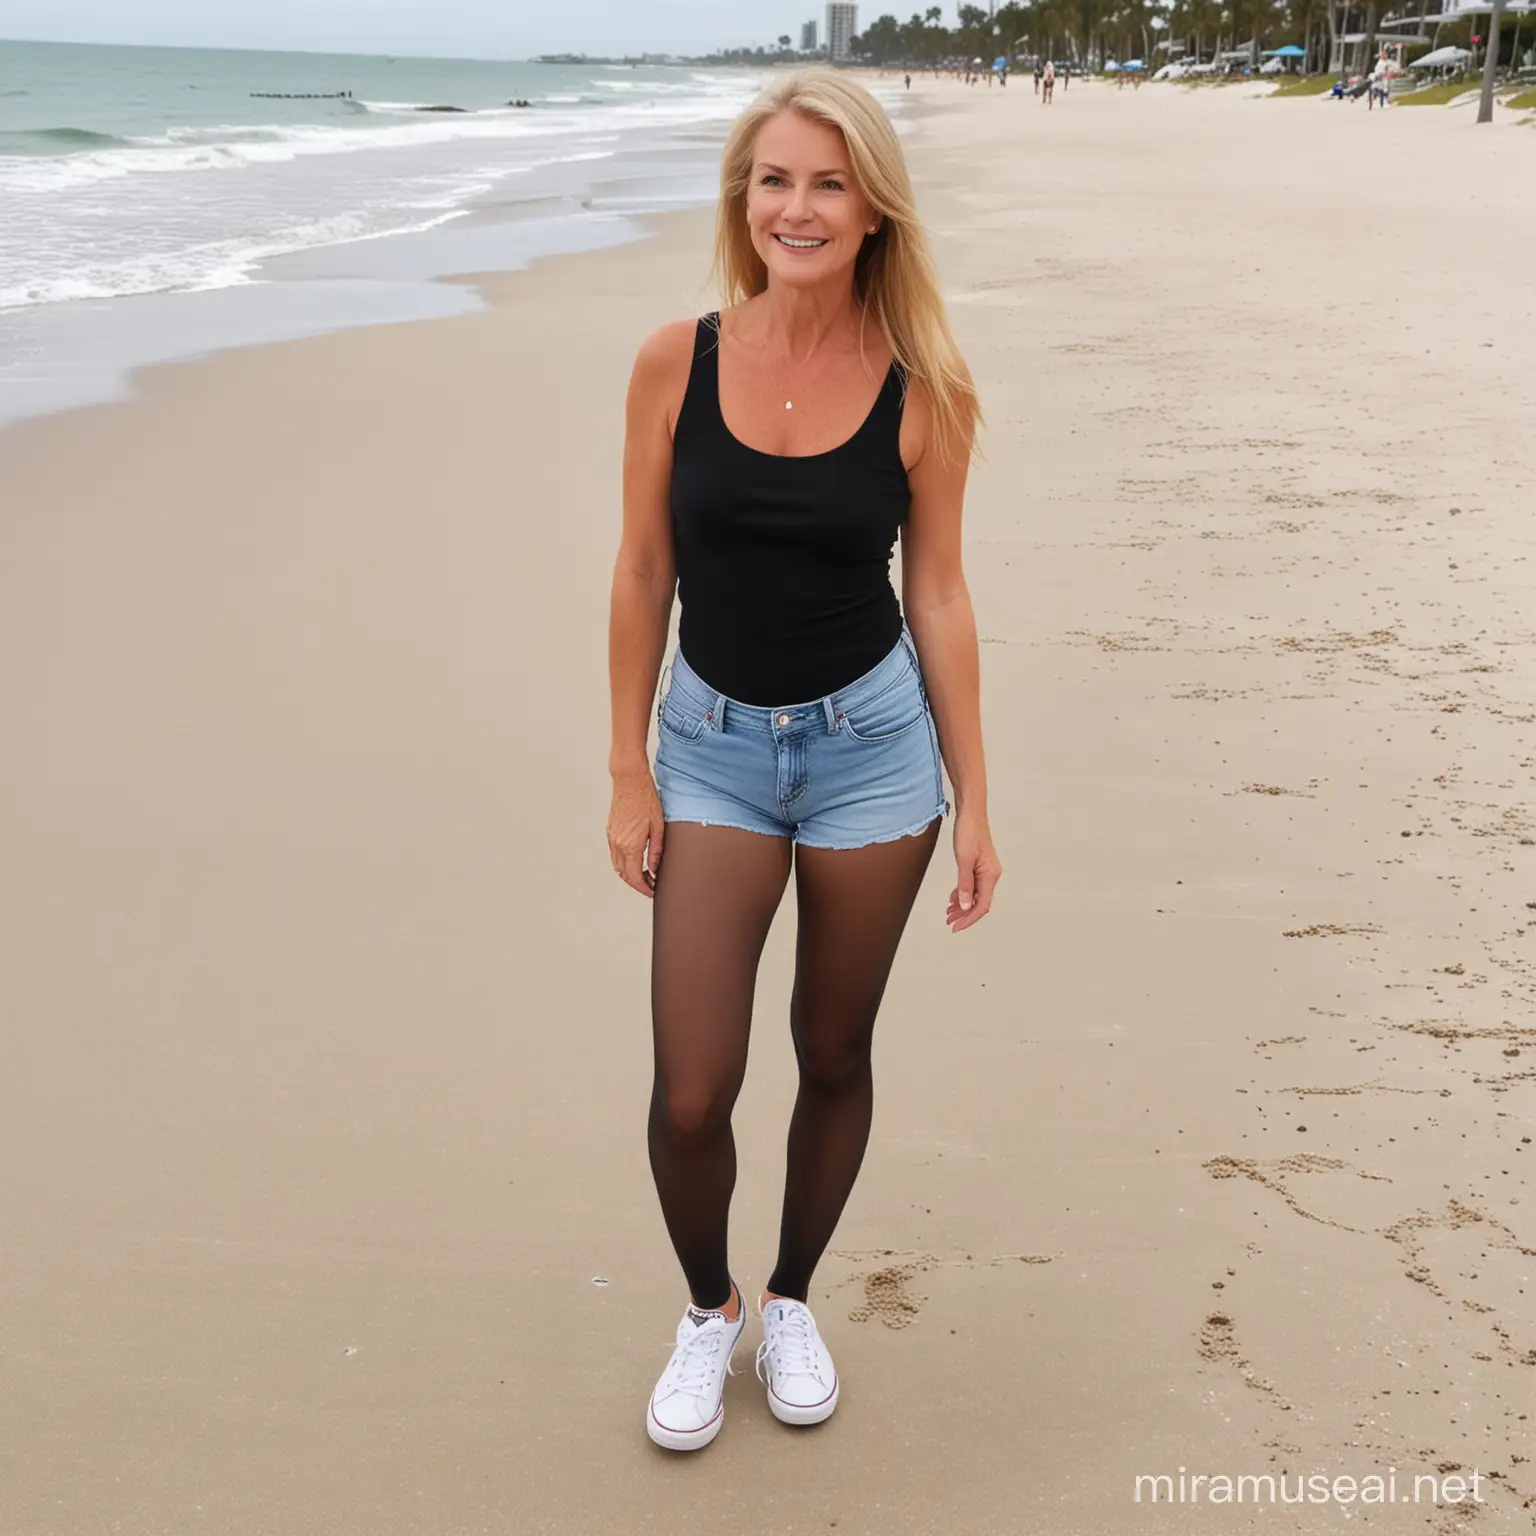 Senior Woman in Casual Beach Attire Walking on Sandy Florida Beach